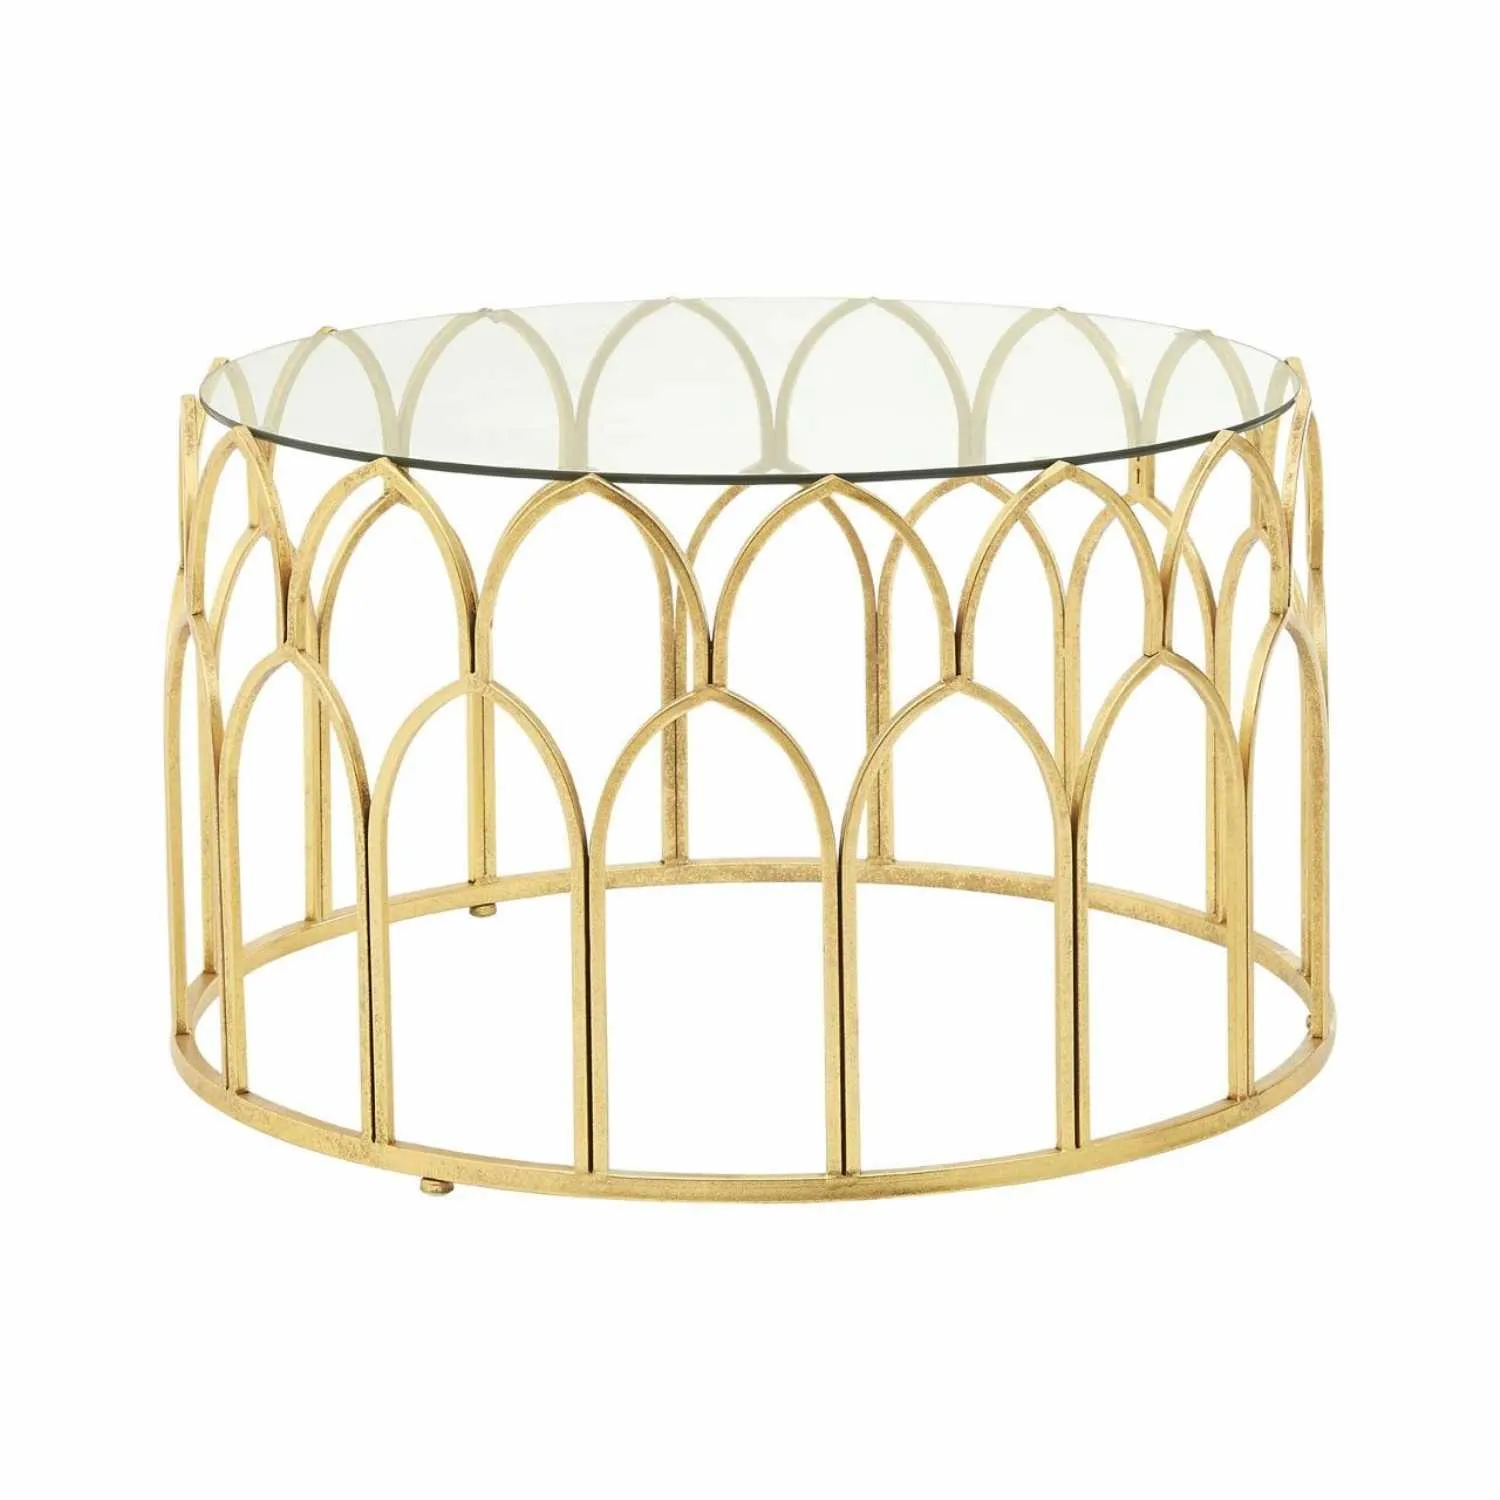 Moorish Design Fusion Style Glass Coffee Table Gold Iron Leaf